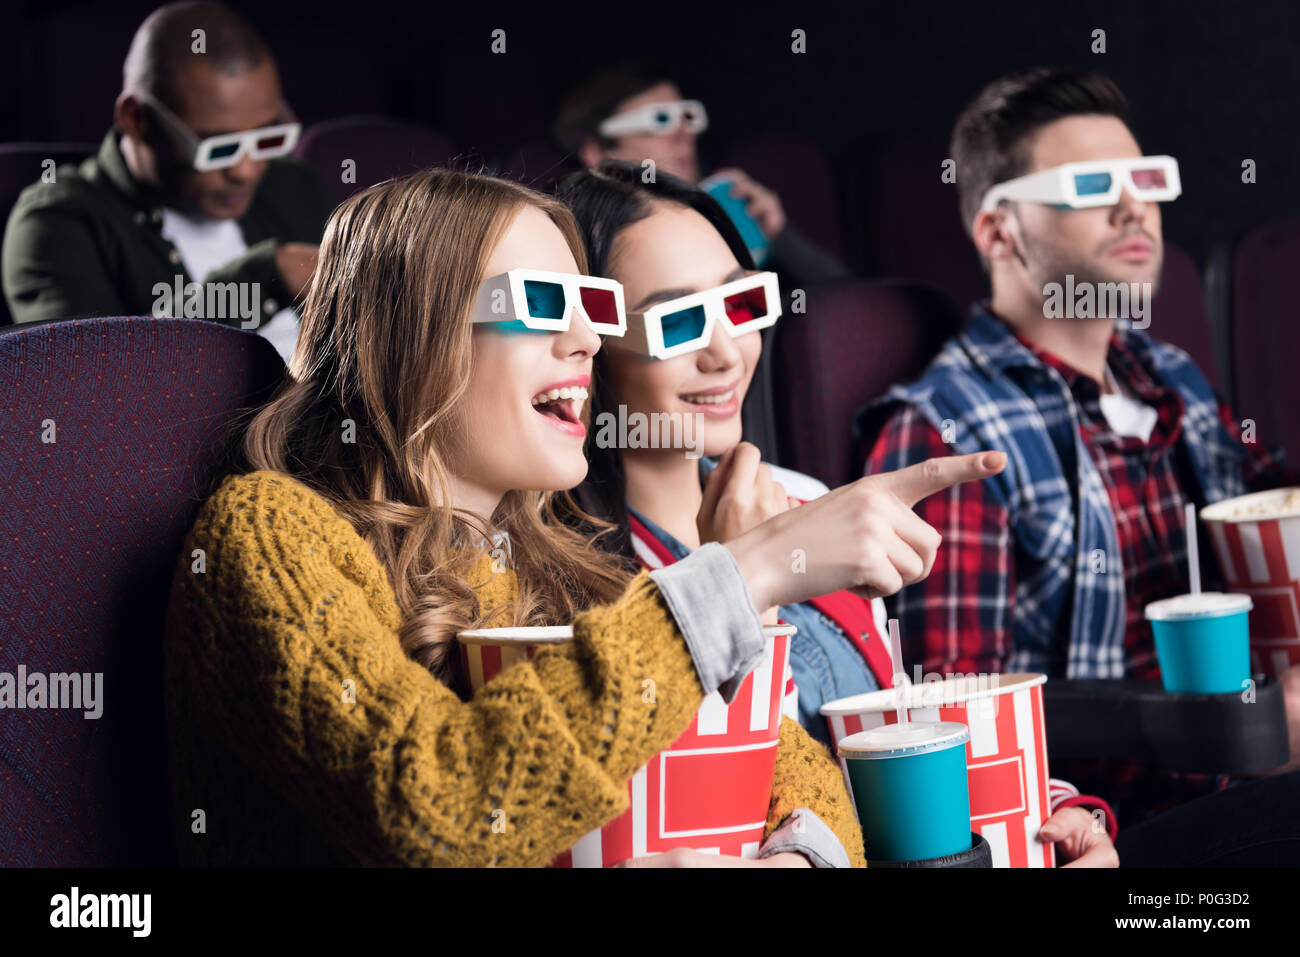 We can go to the cinema. Попкорн кинотеатр очки. Фотосессия в кинозале. Фотосессия в кинотеатре. Люди в кинотеатре в очках.